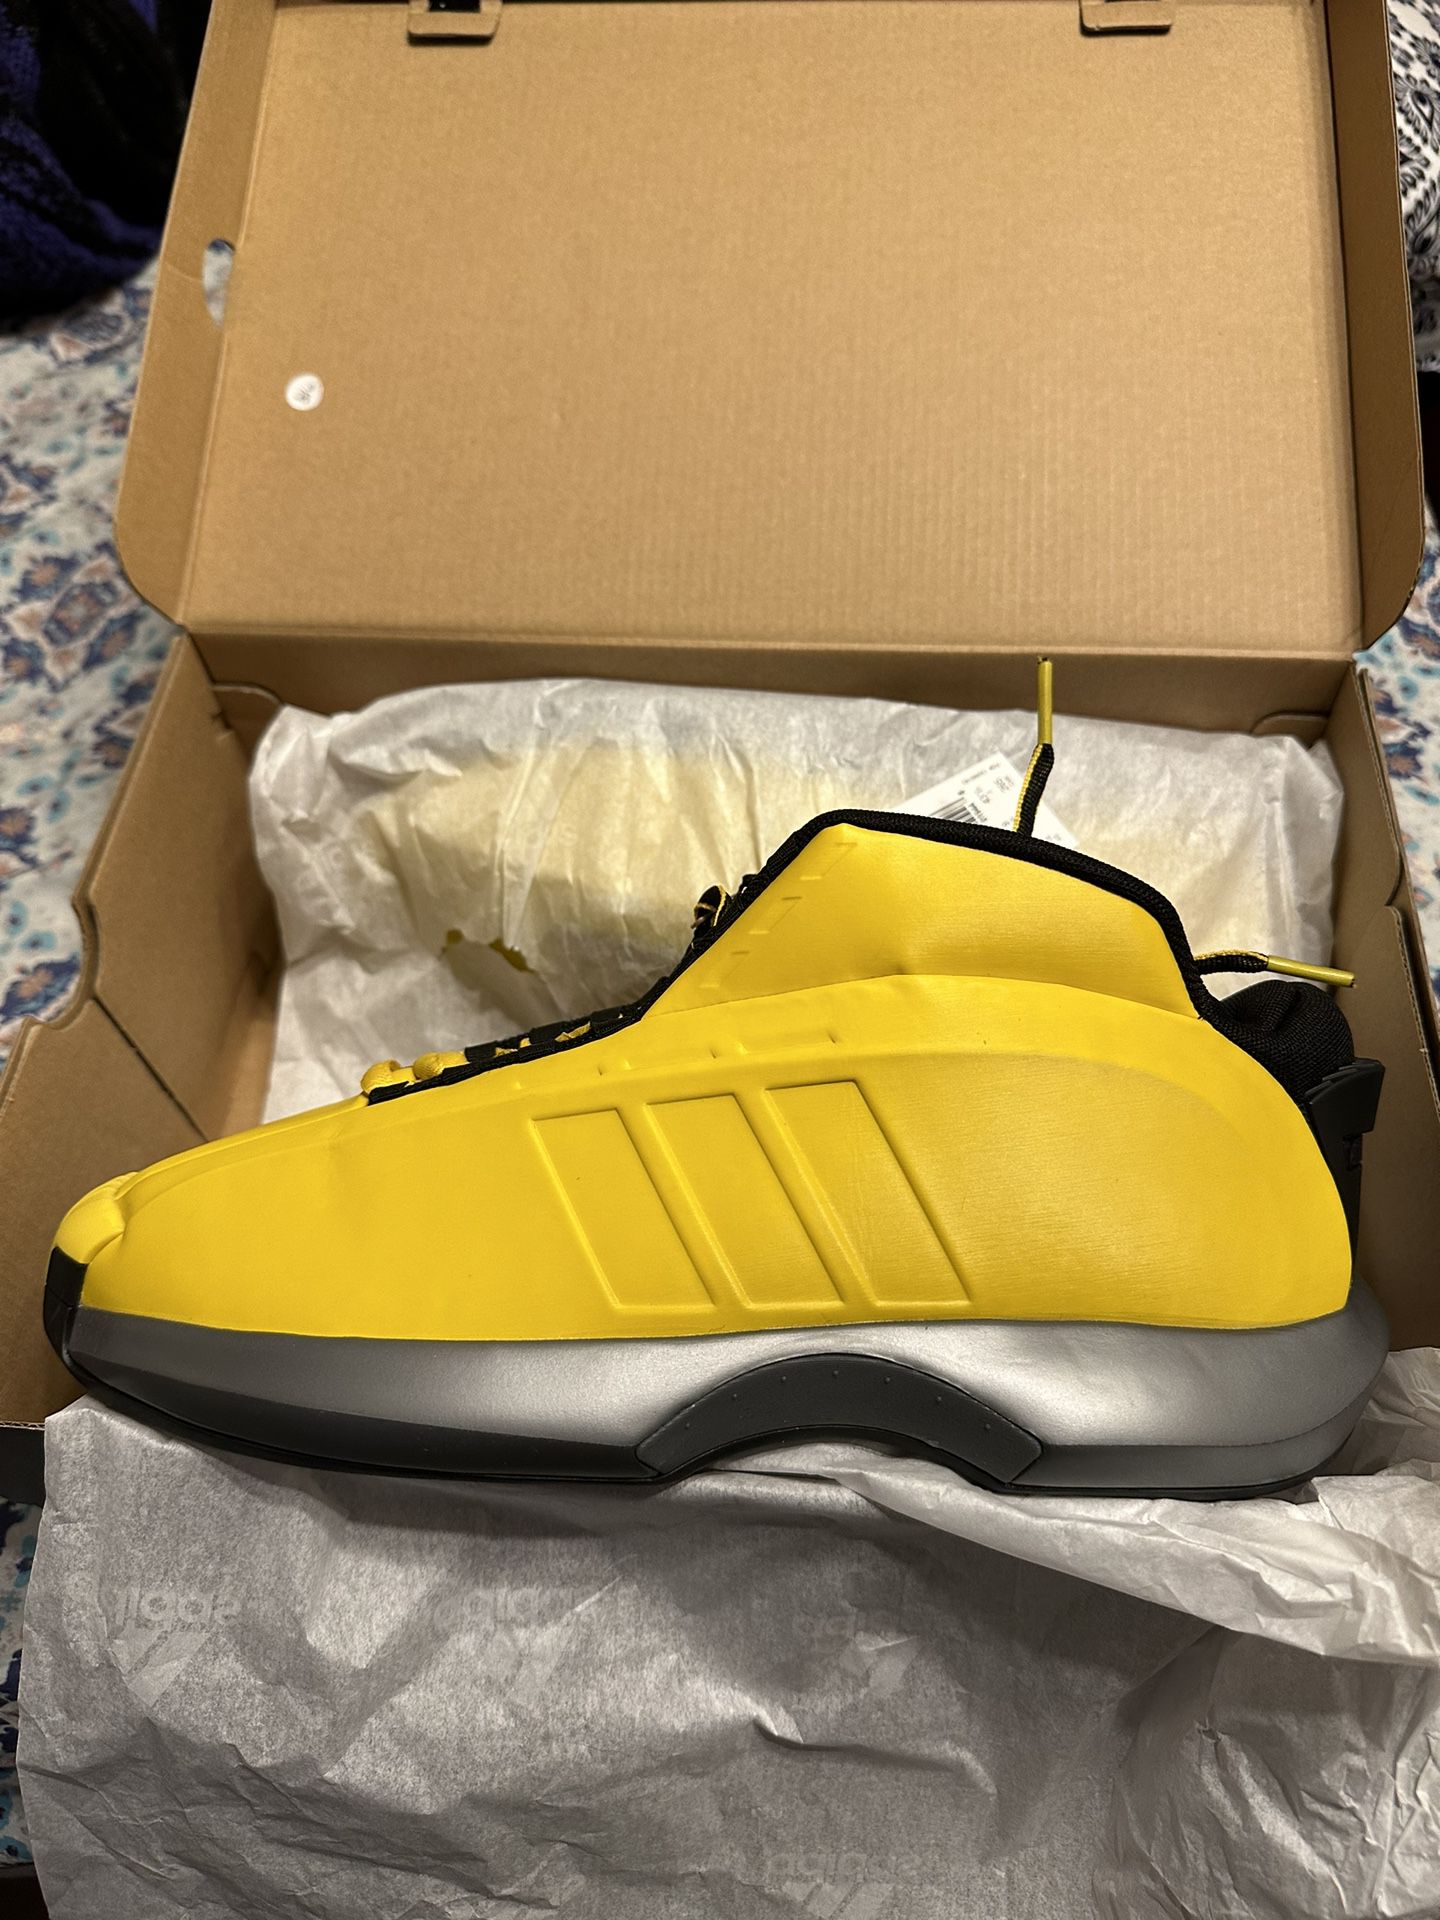 Brand new Adidas Crazy 1 Sunshine ☀️ size 9.5 with Box 